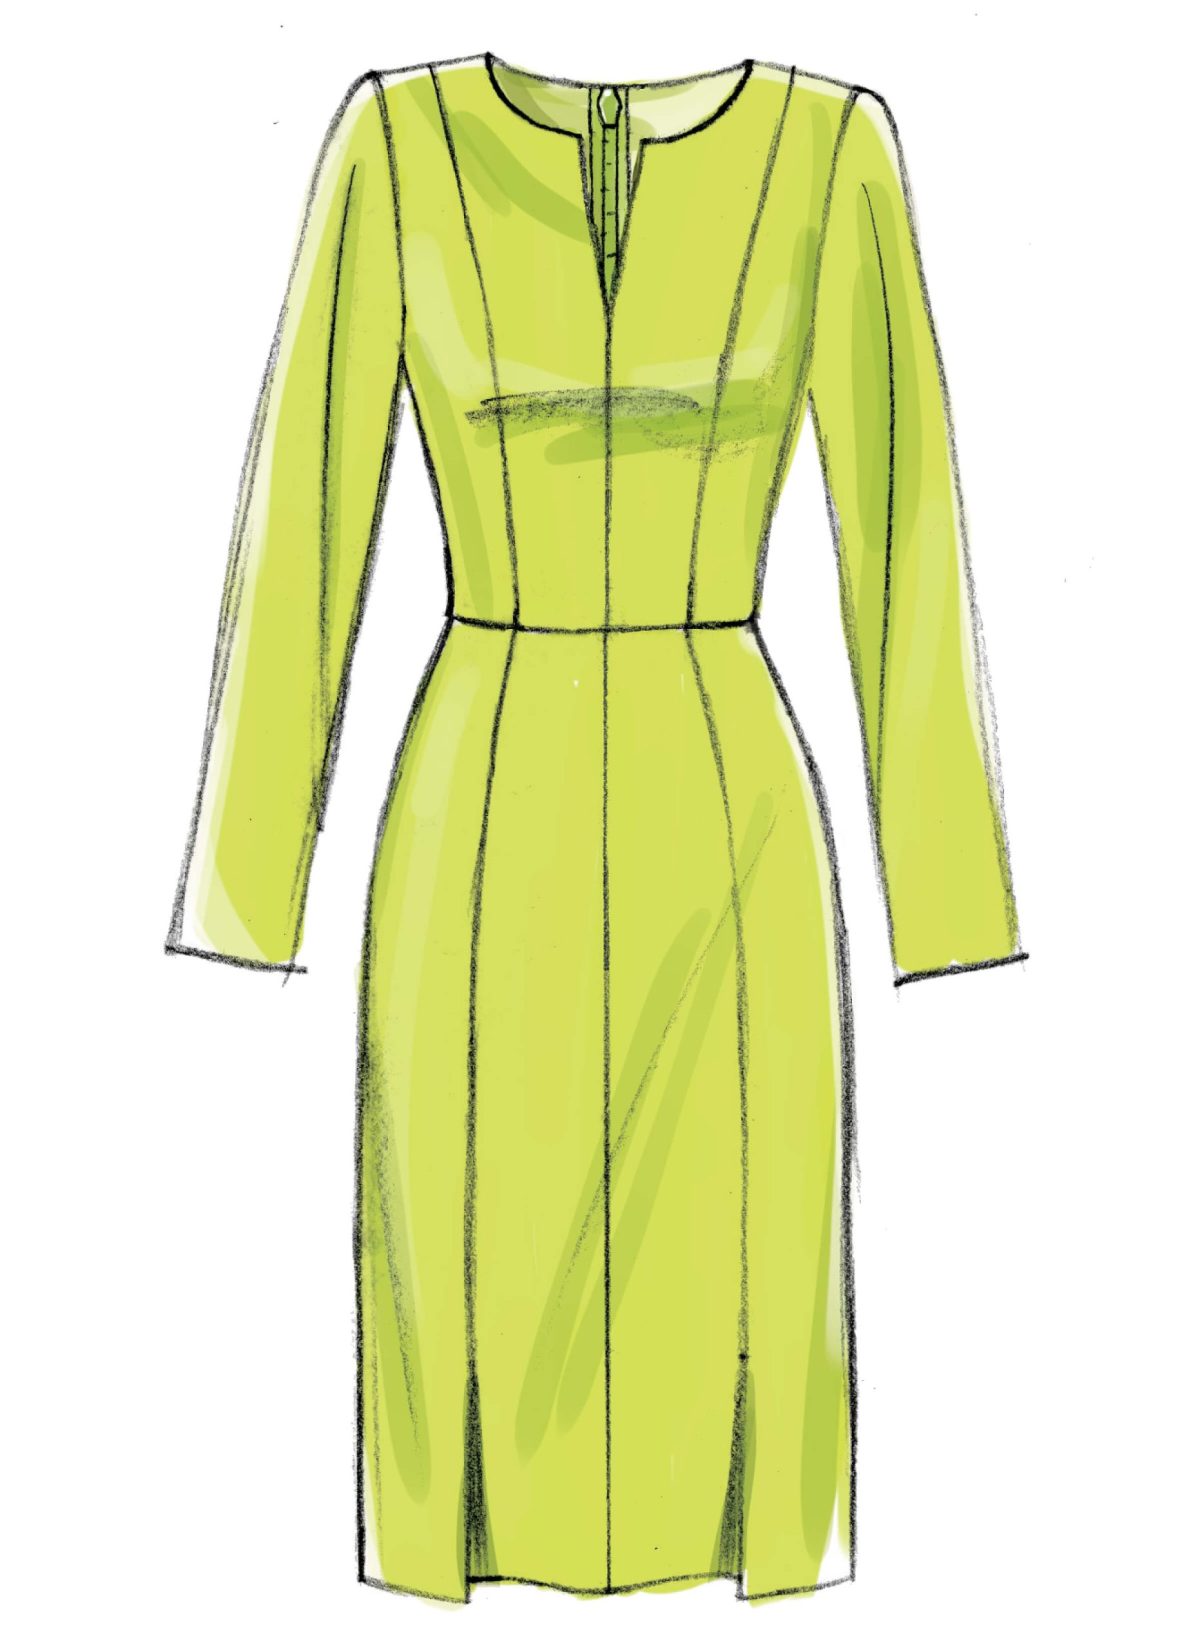 Vogue Patterns V9167 Misses' Notch-Neck Princess-Seam Dresses